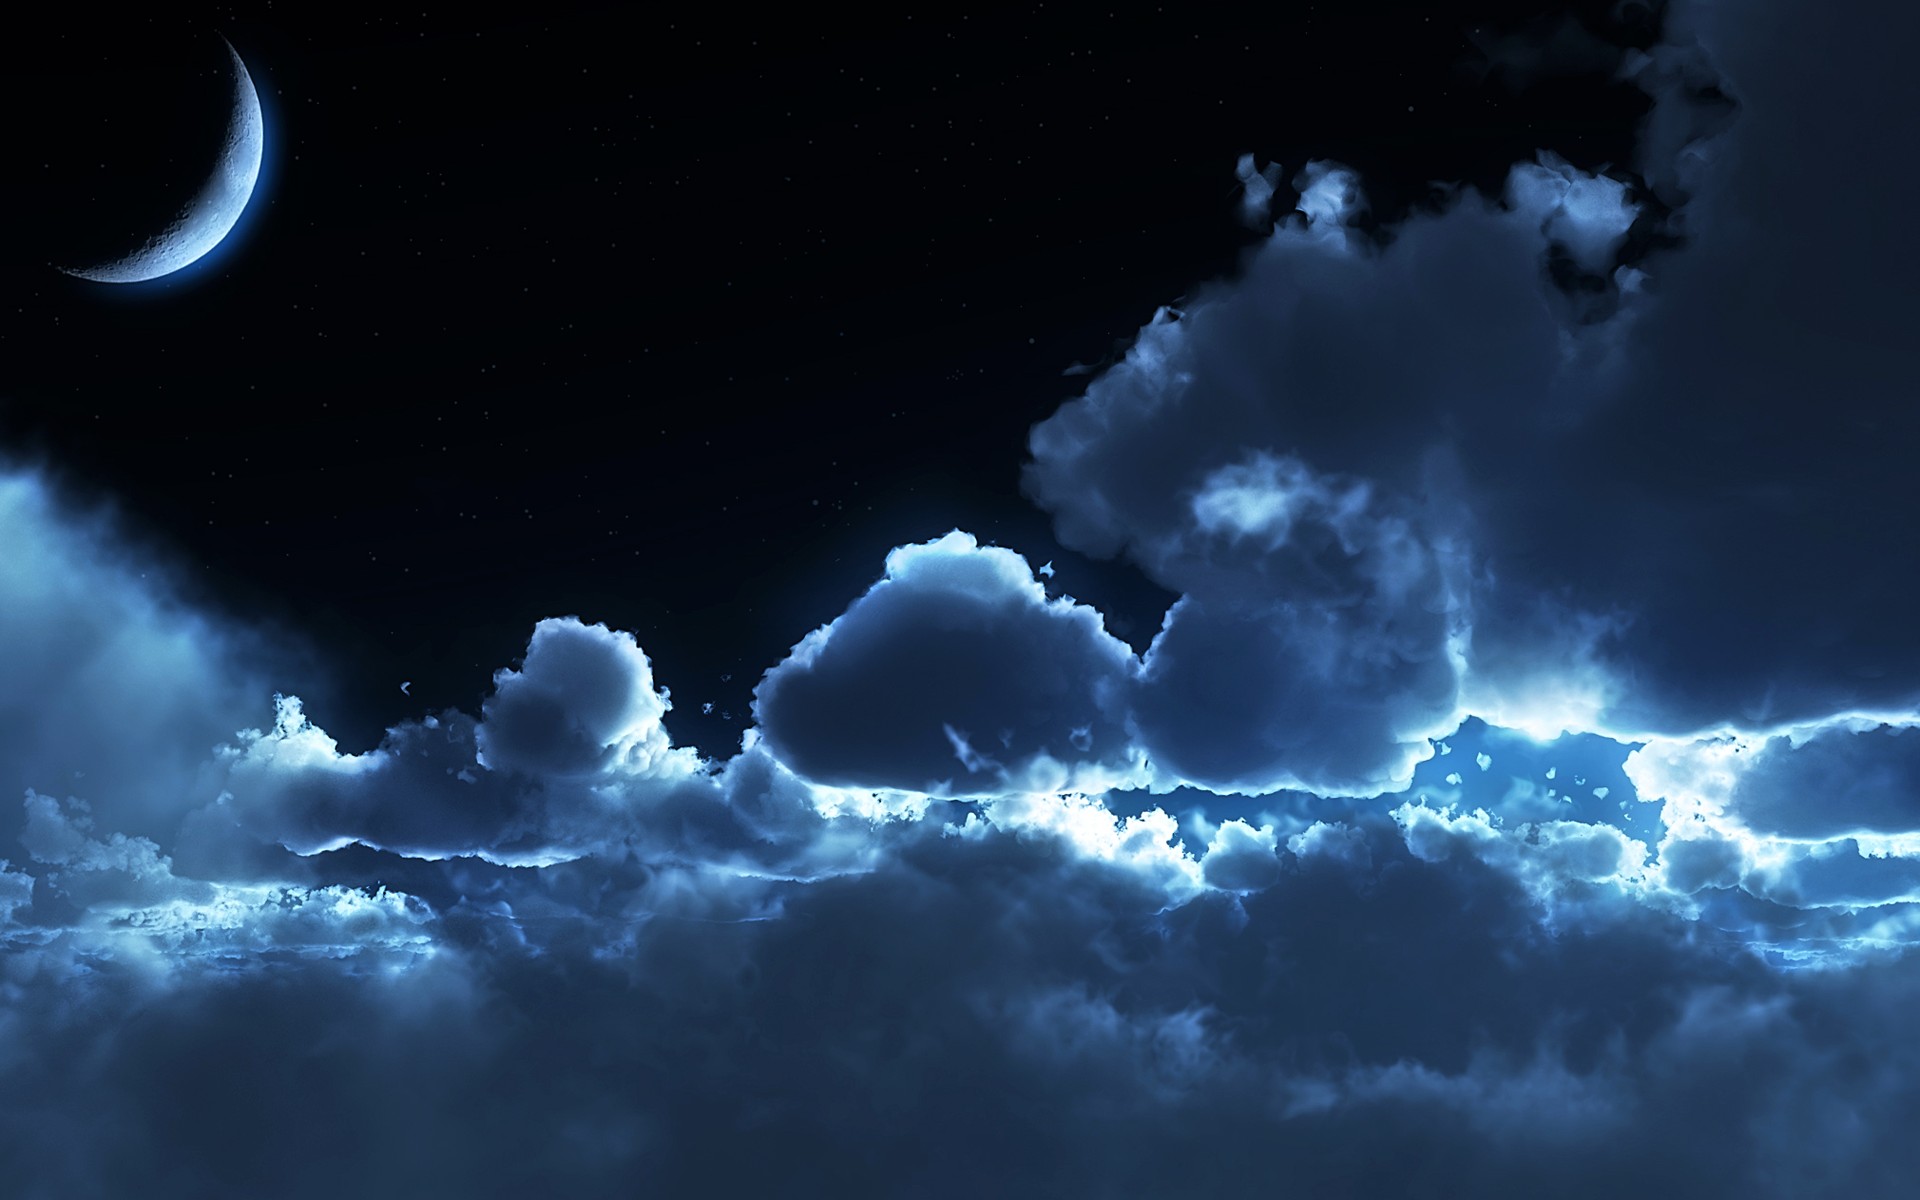 Horrific night desktop wallpaper with moon, clouds, and dark sky.